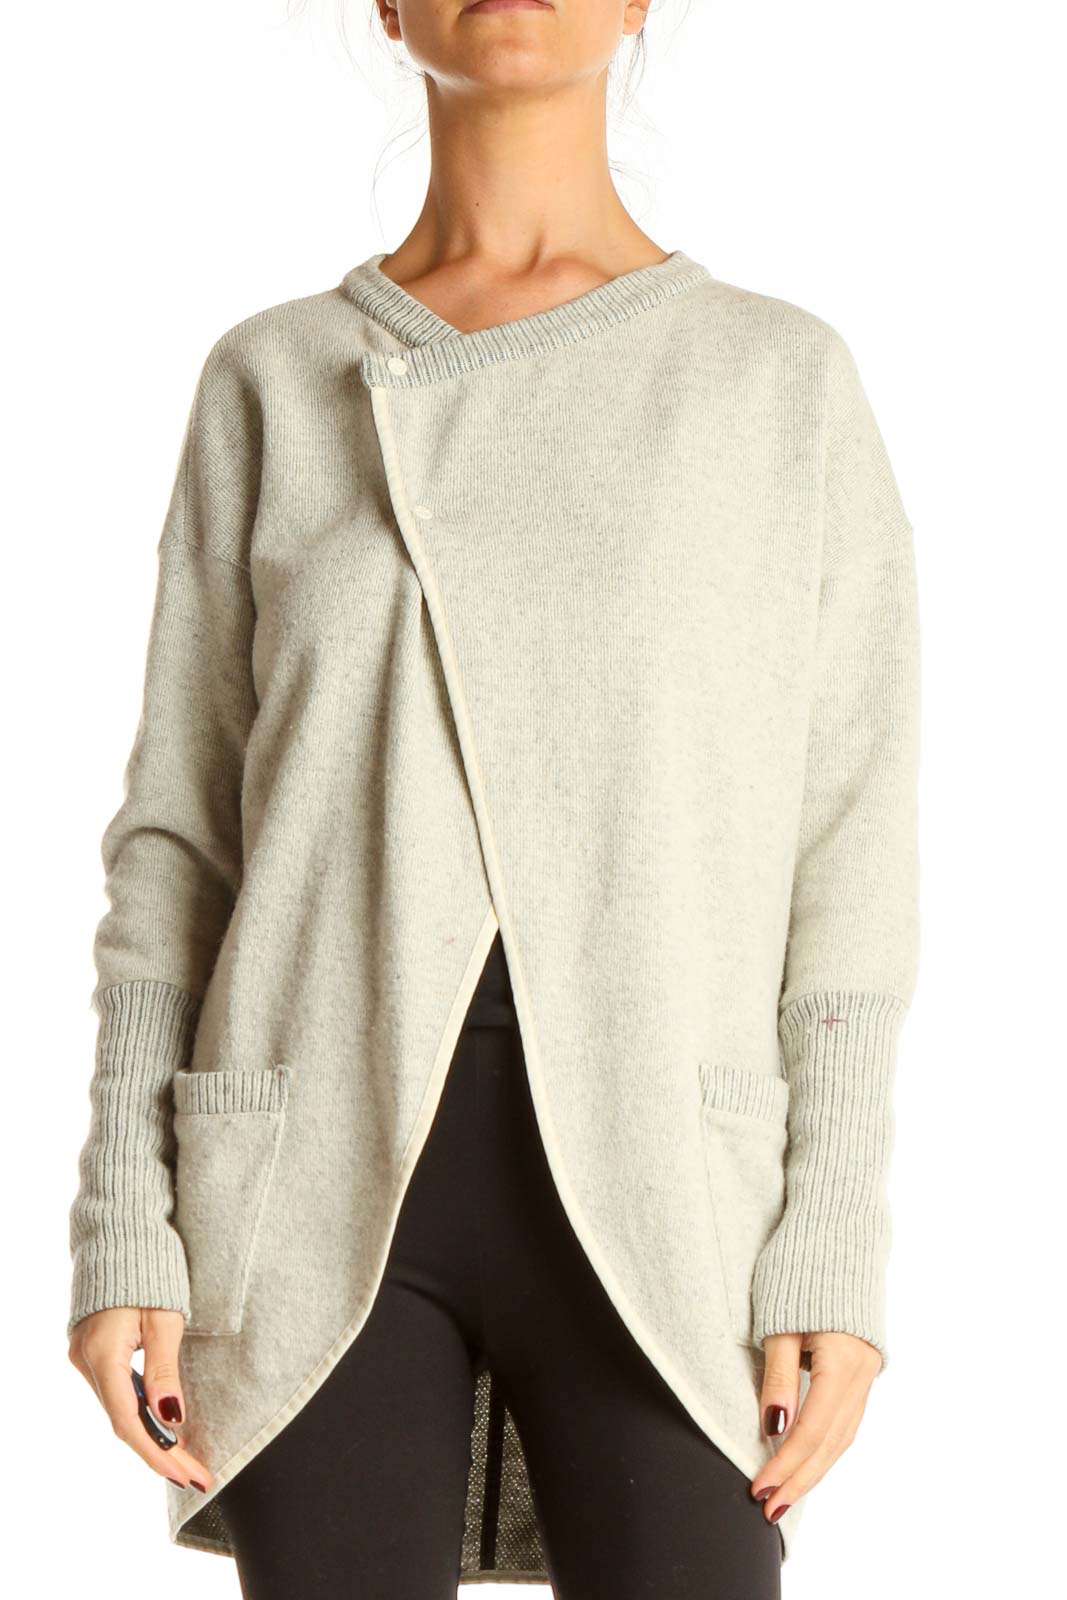 Beige All Day Wear Sweater Front